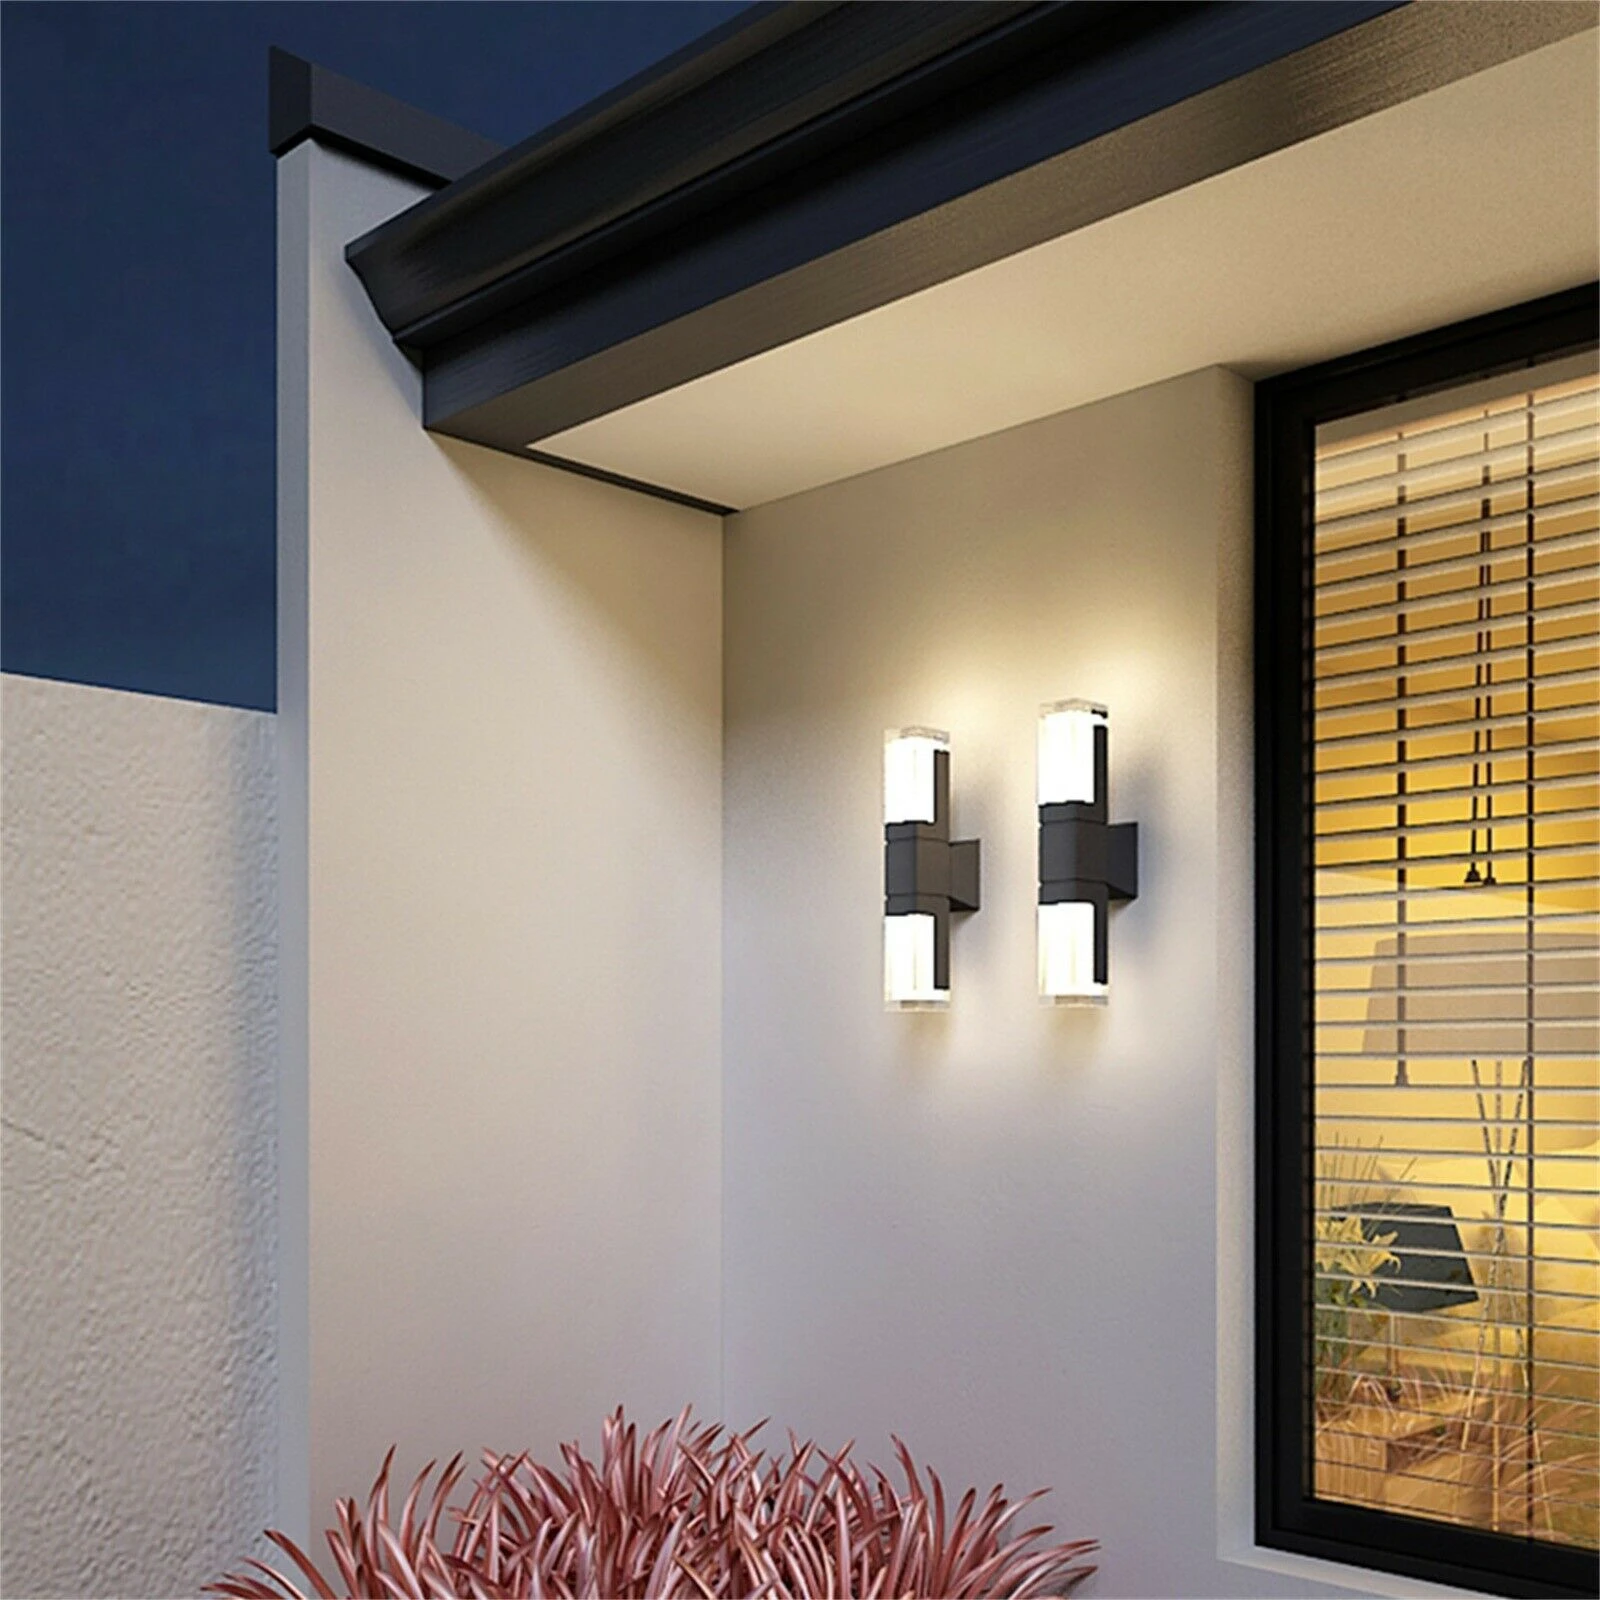 Acrylic Waterproof Outdoor Motion Sensor LED Wall Light Up Down Sconce Lighting 7W  14W Lamp For Home Garden Yard Corridor